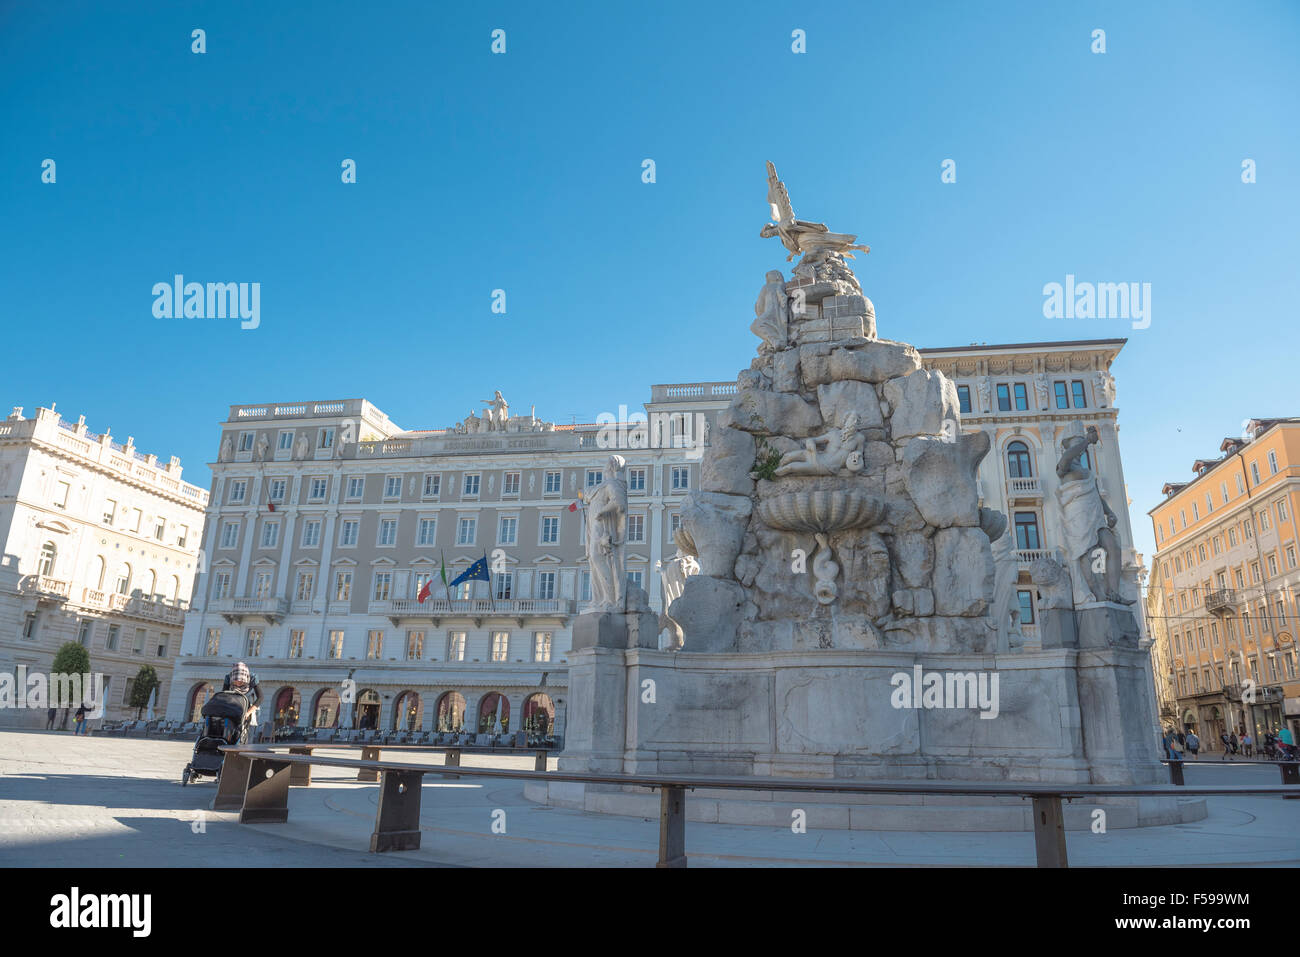 La fuente de los cuatro continentes (Fontana dei Quattro Continenti) en la Piazza dell'Unita d'Italia, en Trieste, Italia. Foto de stock